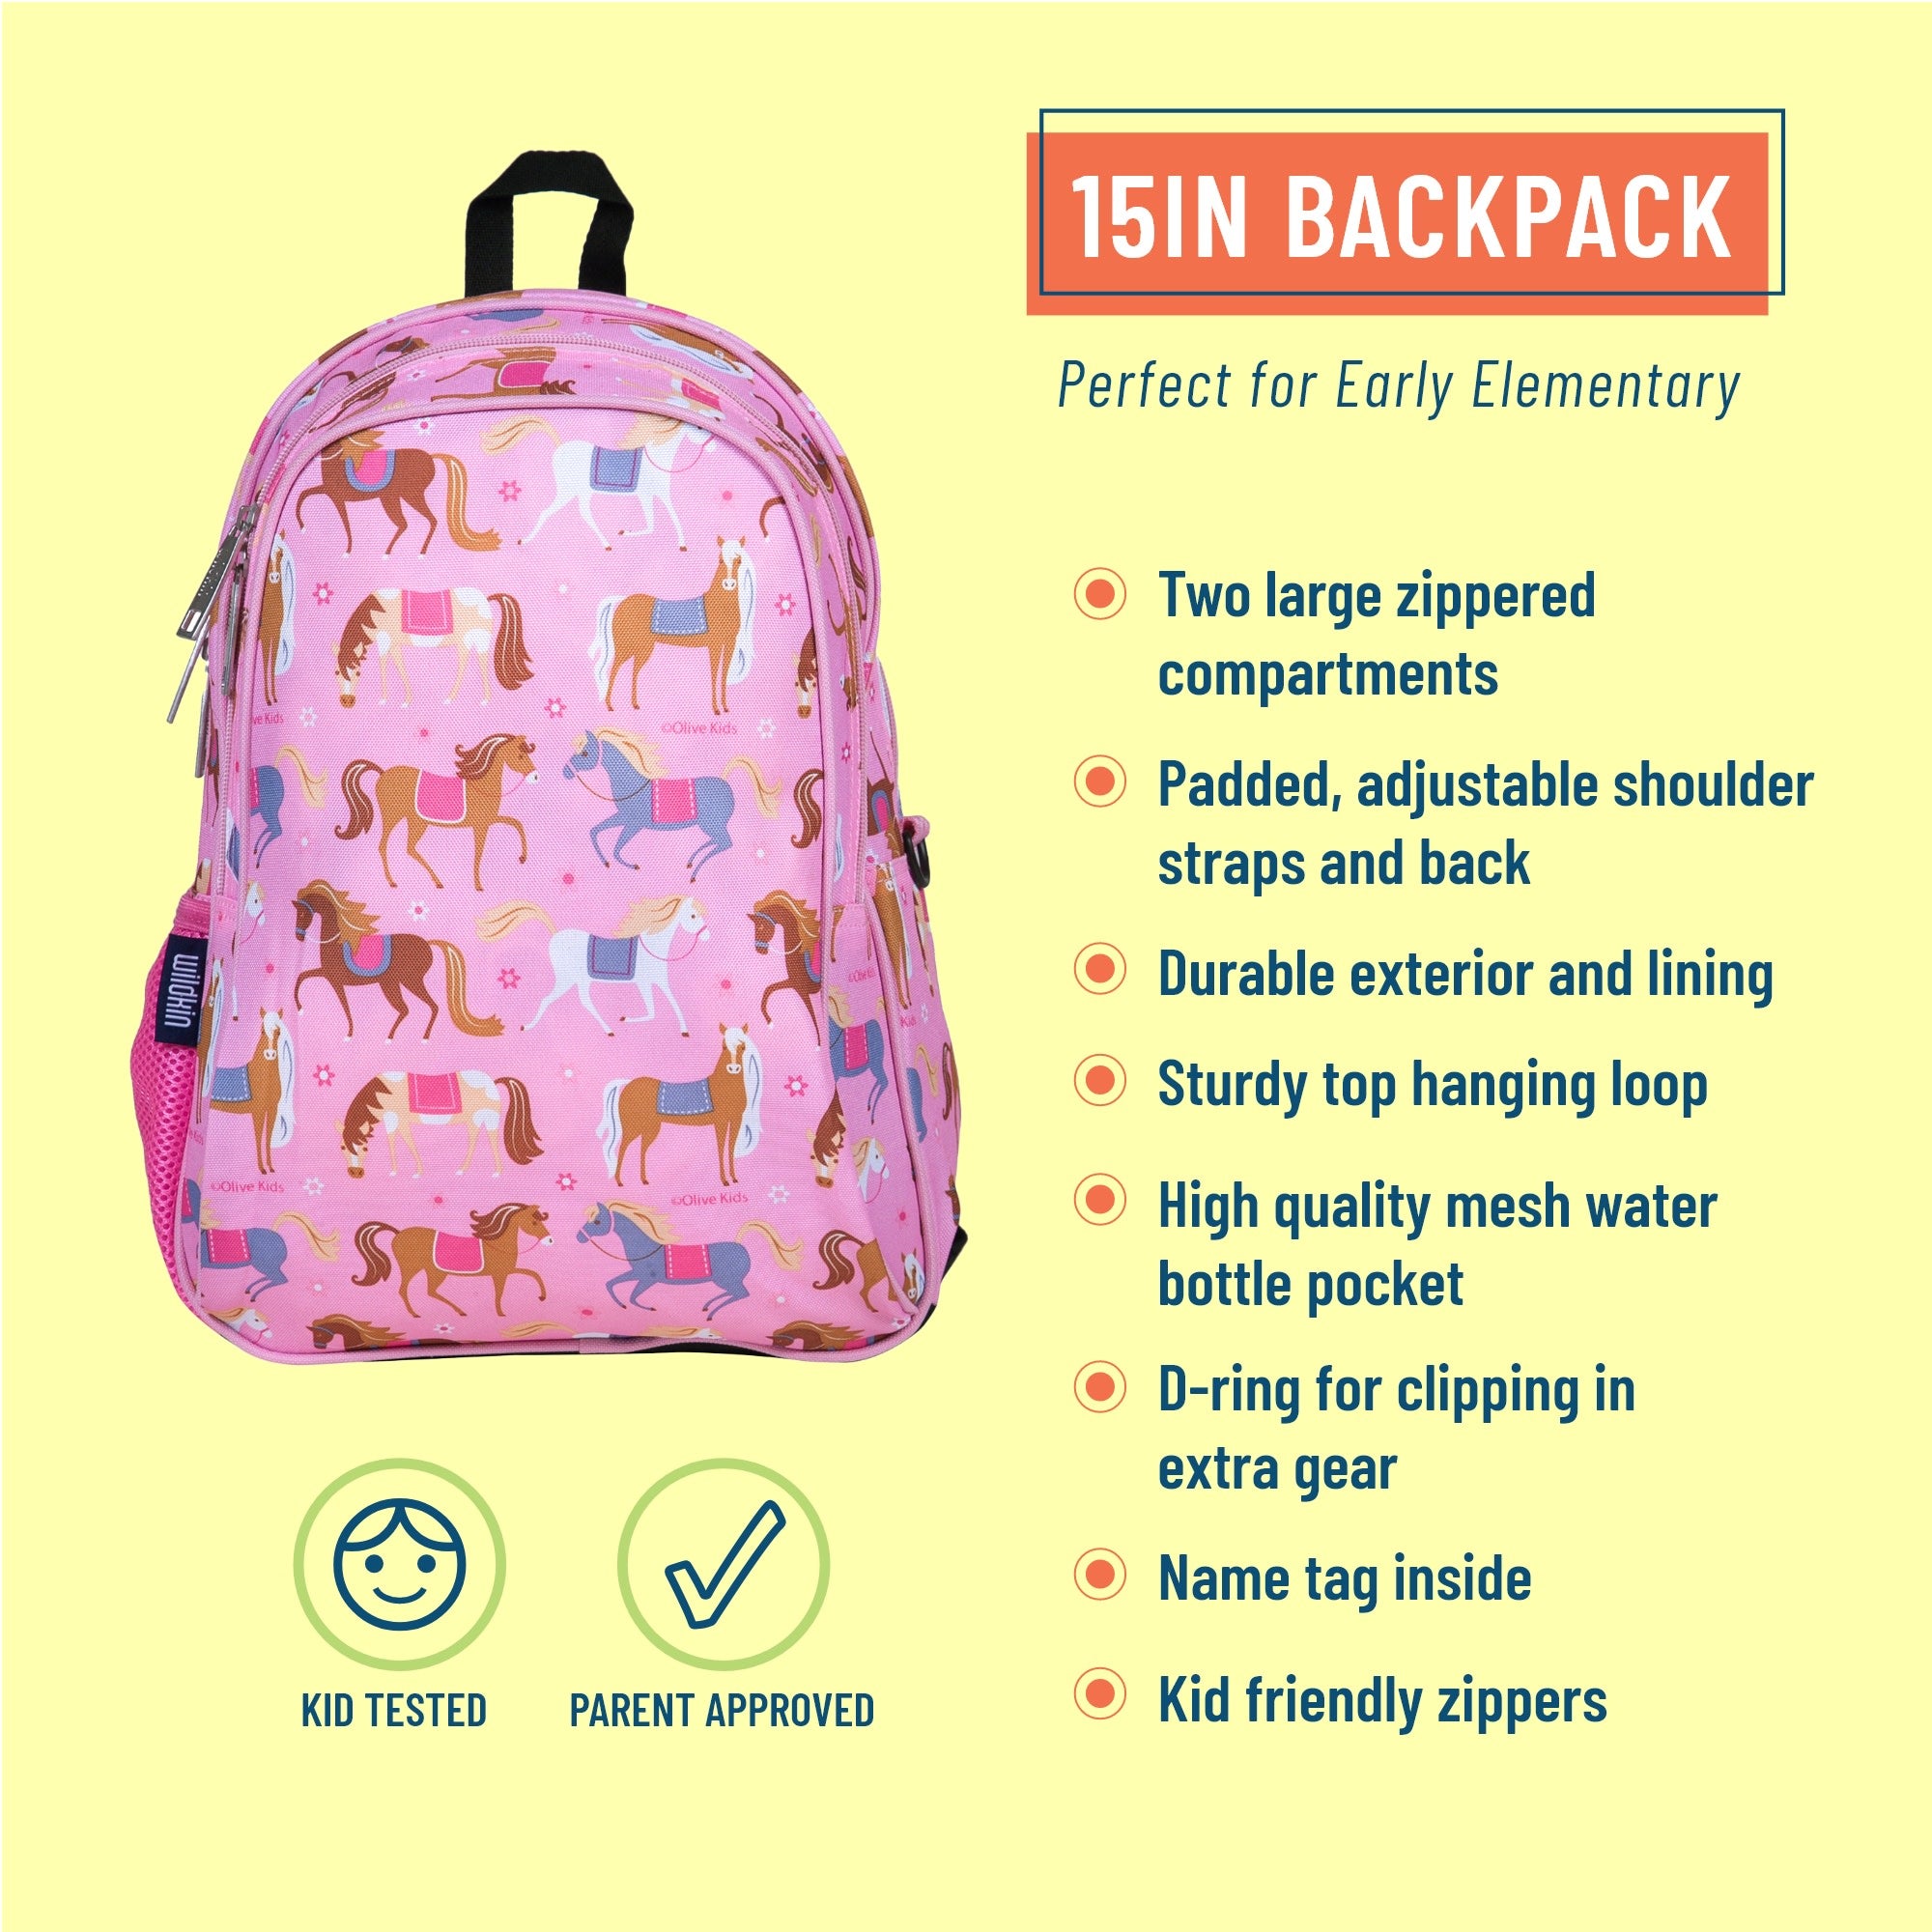 Wildkin Horses 15 Backpack - Pink